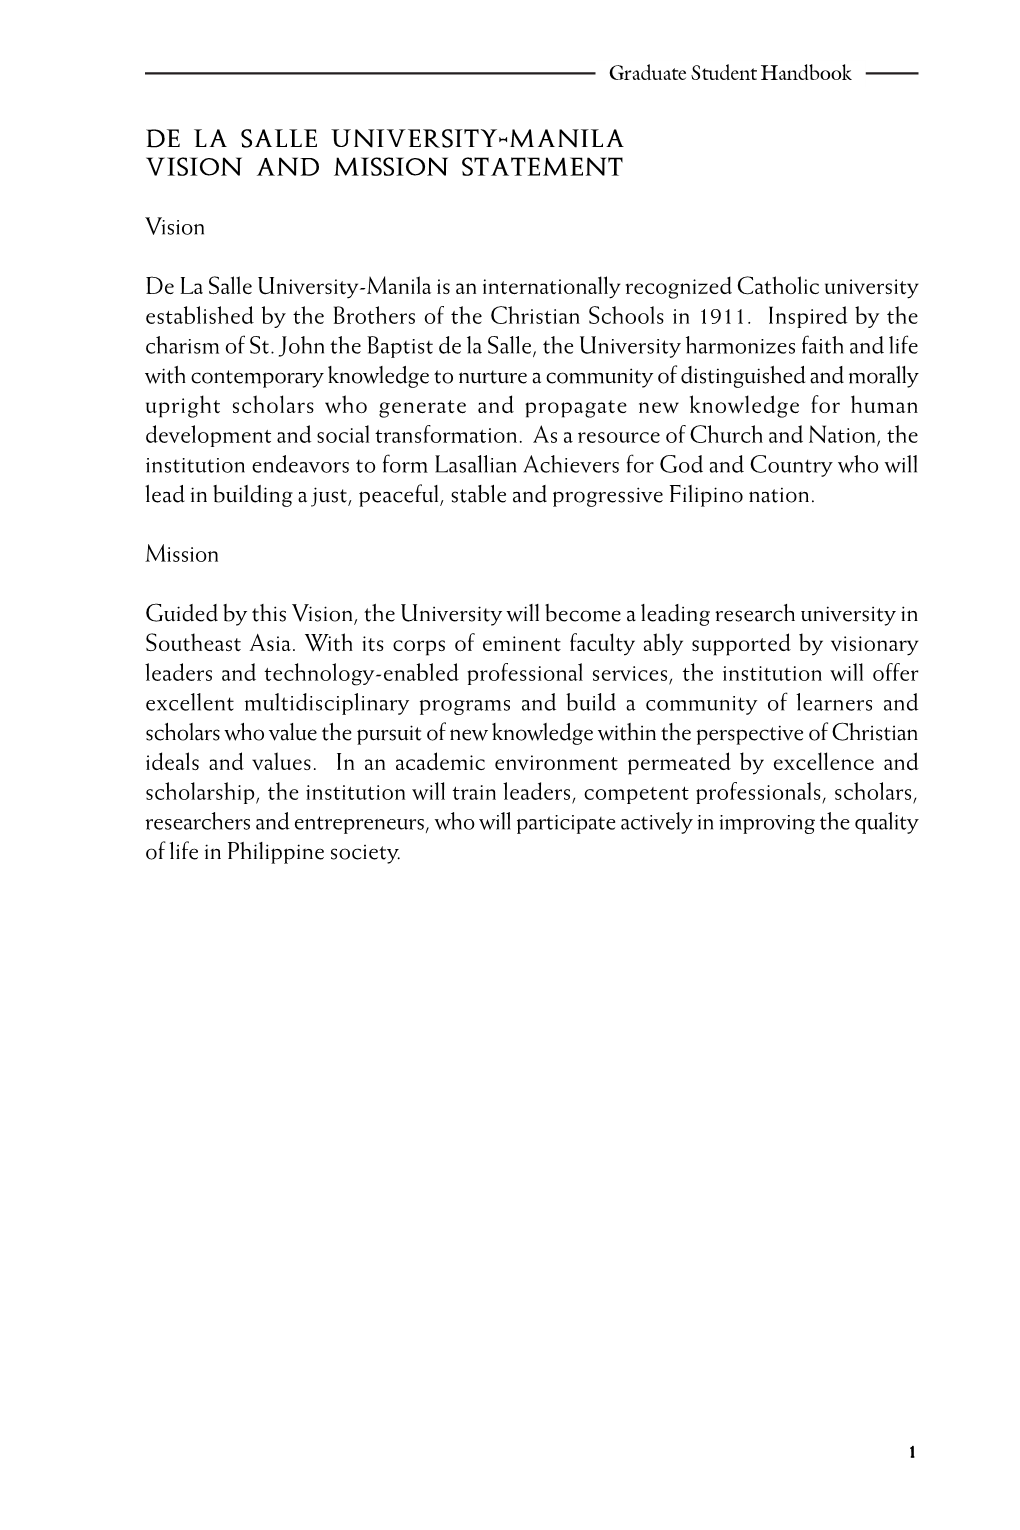 De La Salle University-Manila Vision and Mission Statement